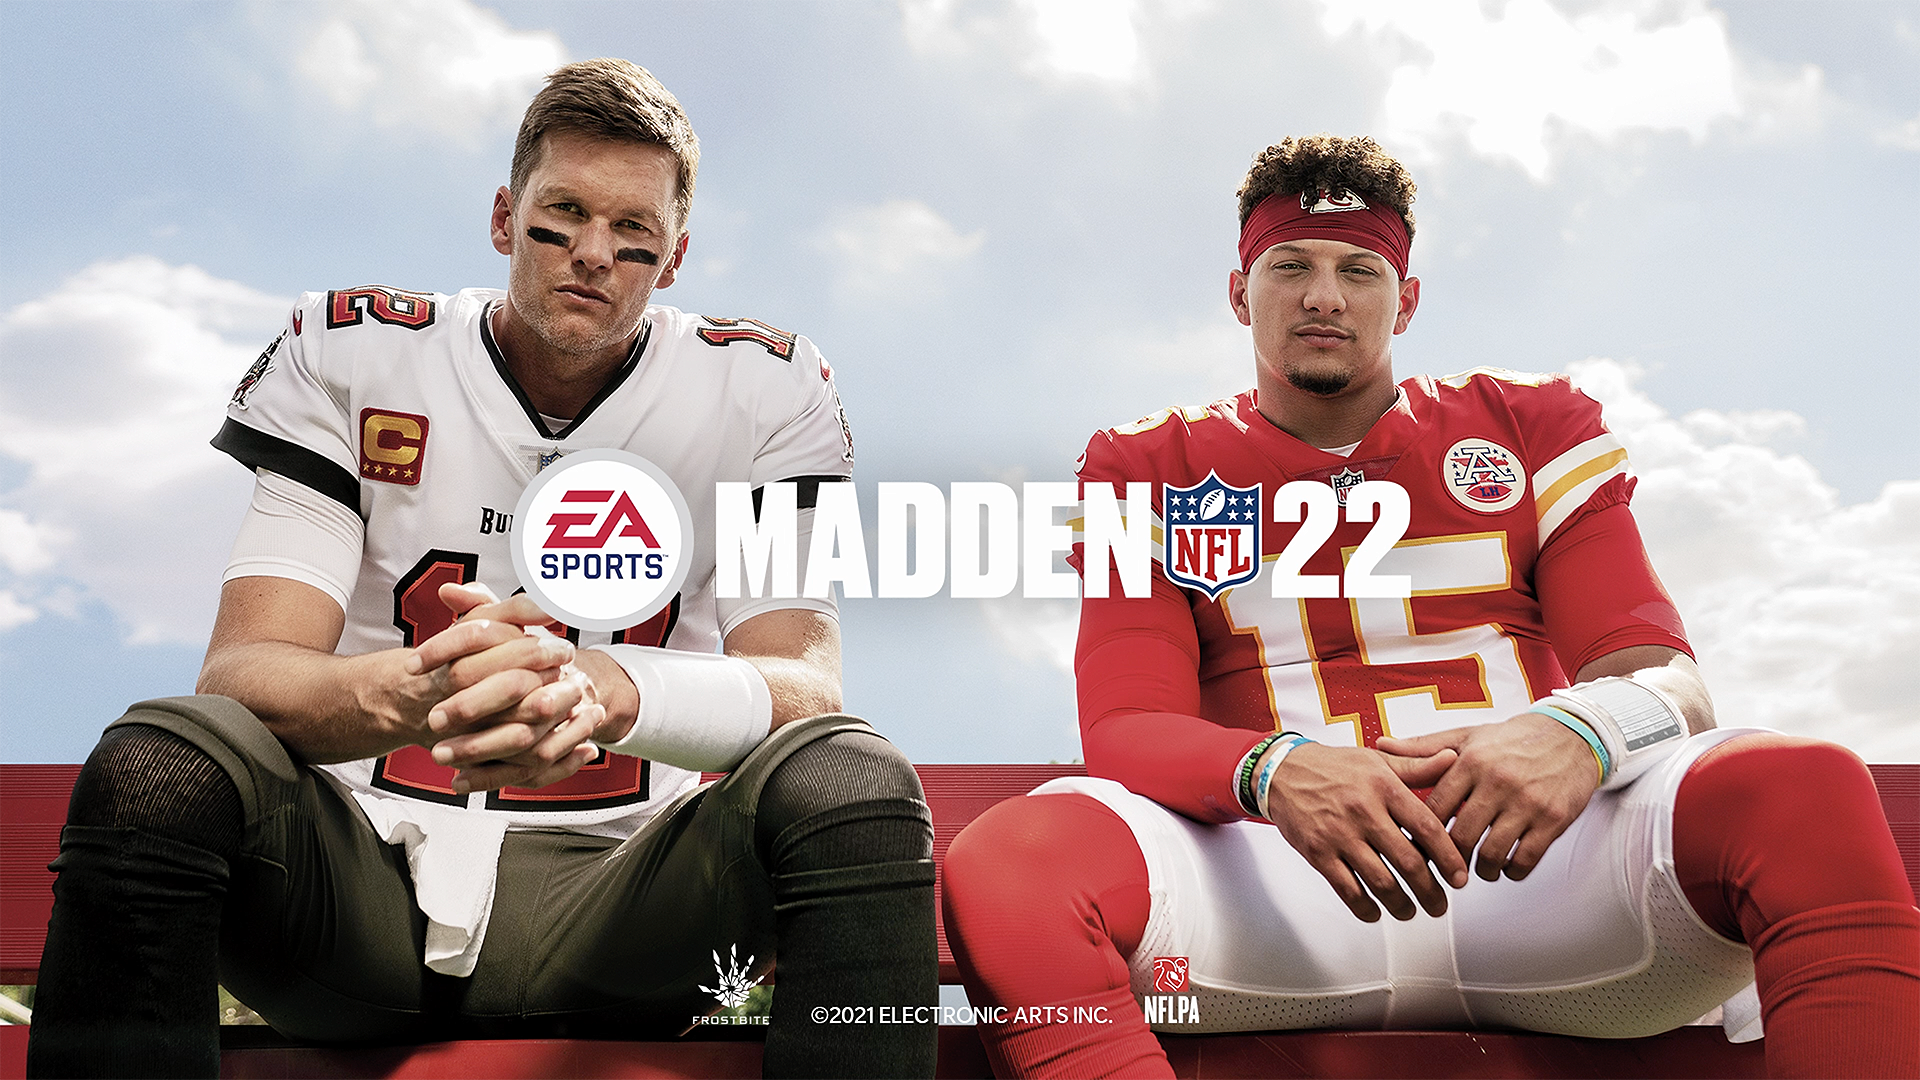 Madden NFL 22 cover image